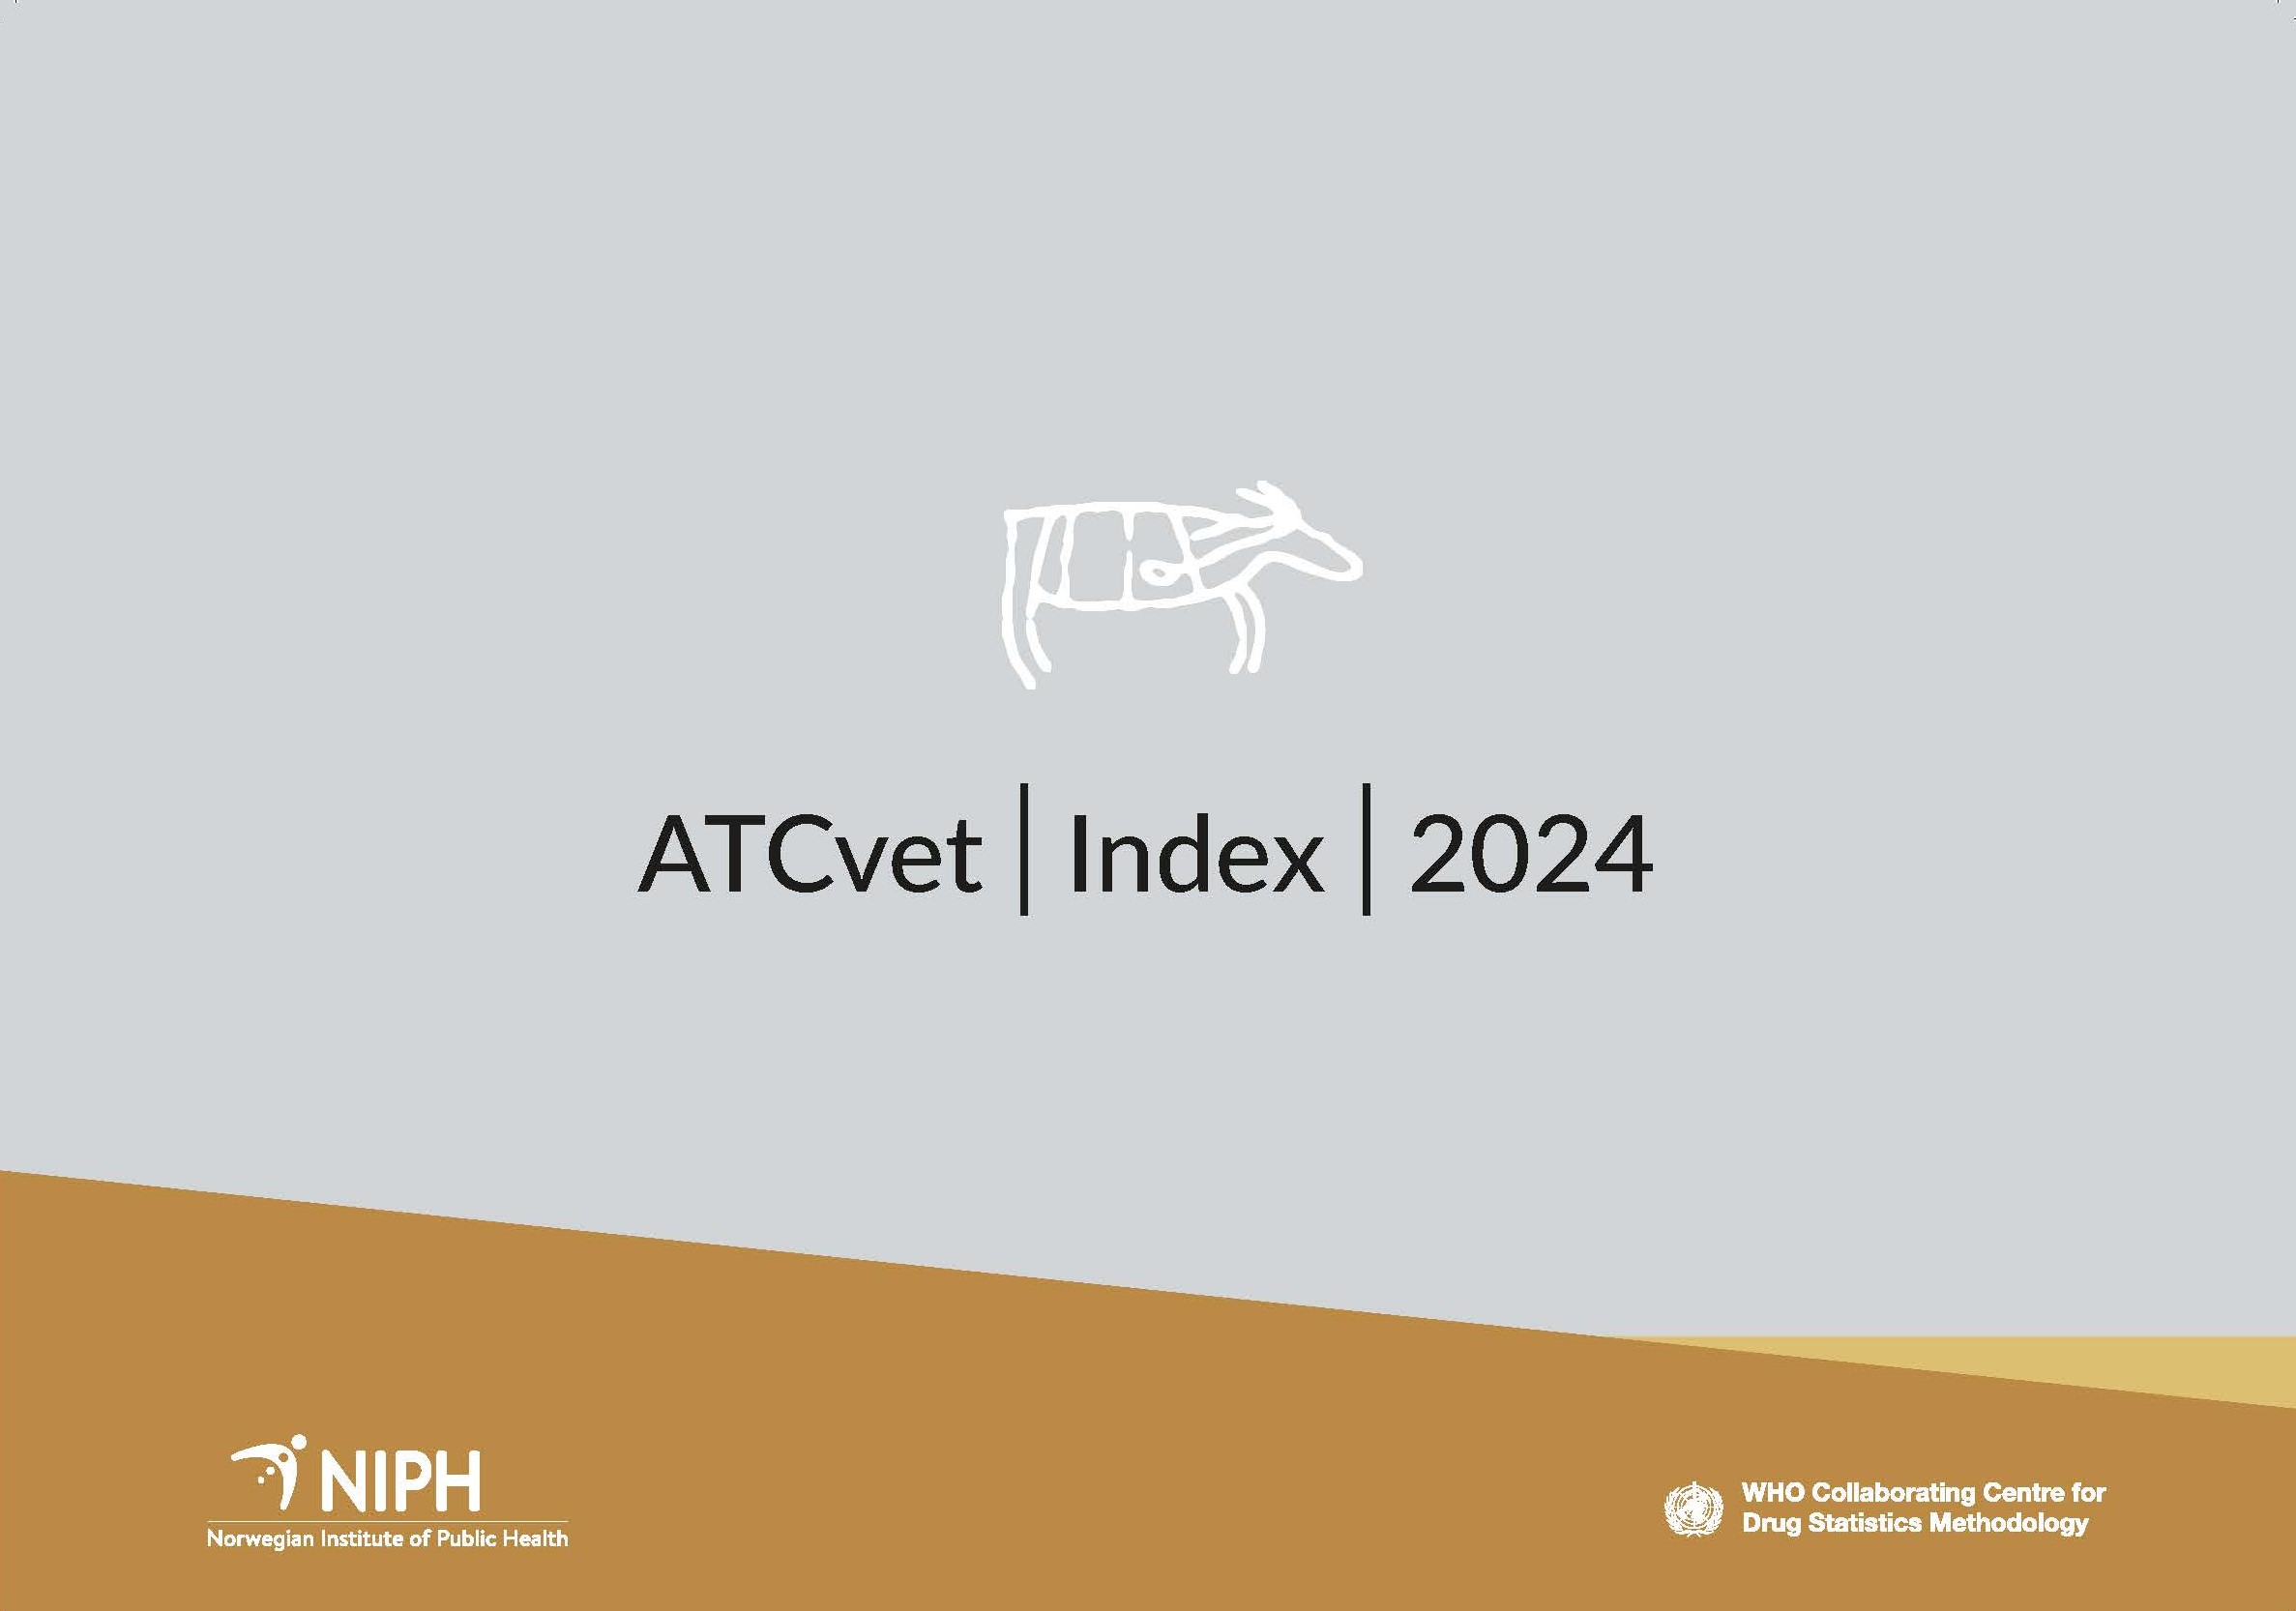 ATCvet index 2010